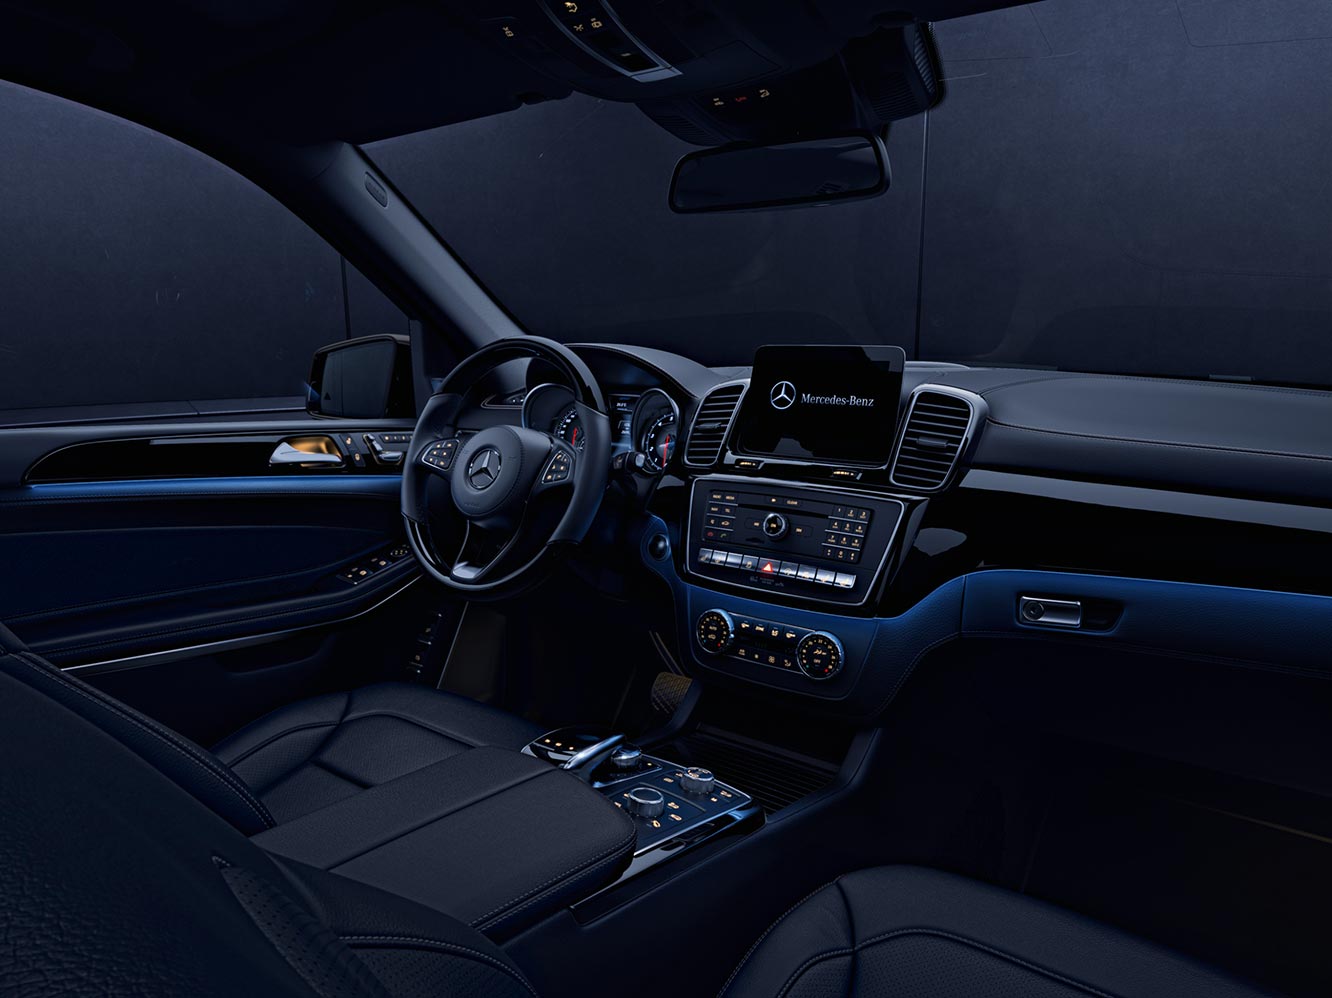 Interior Design of the 2018 Mercedes-AMG GLS 63 